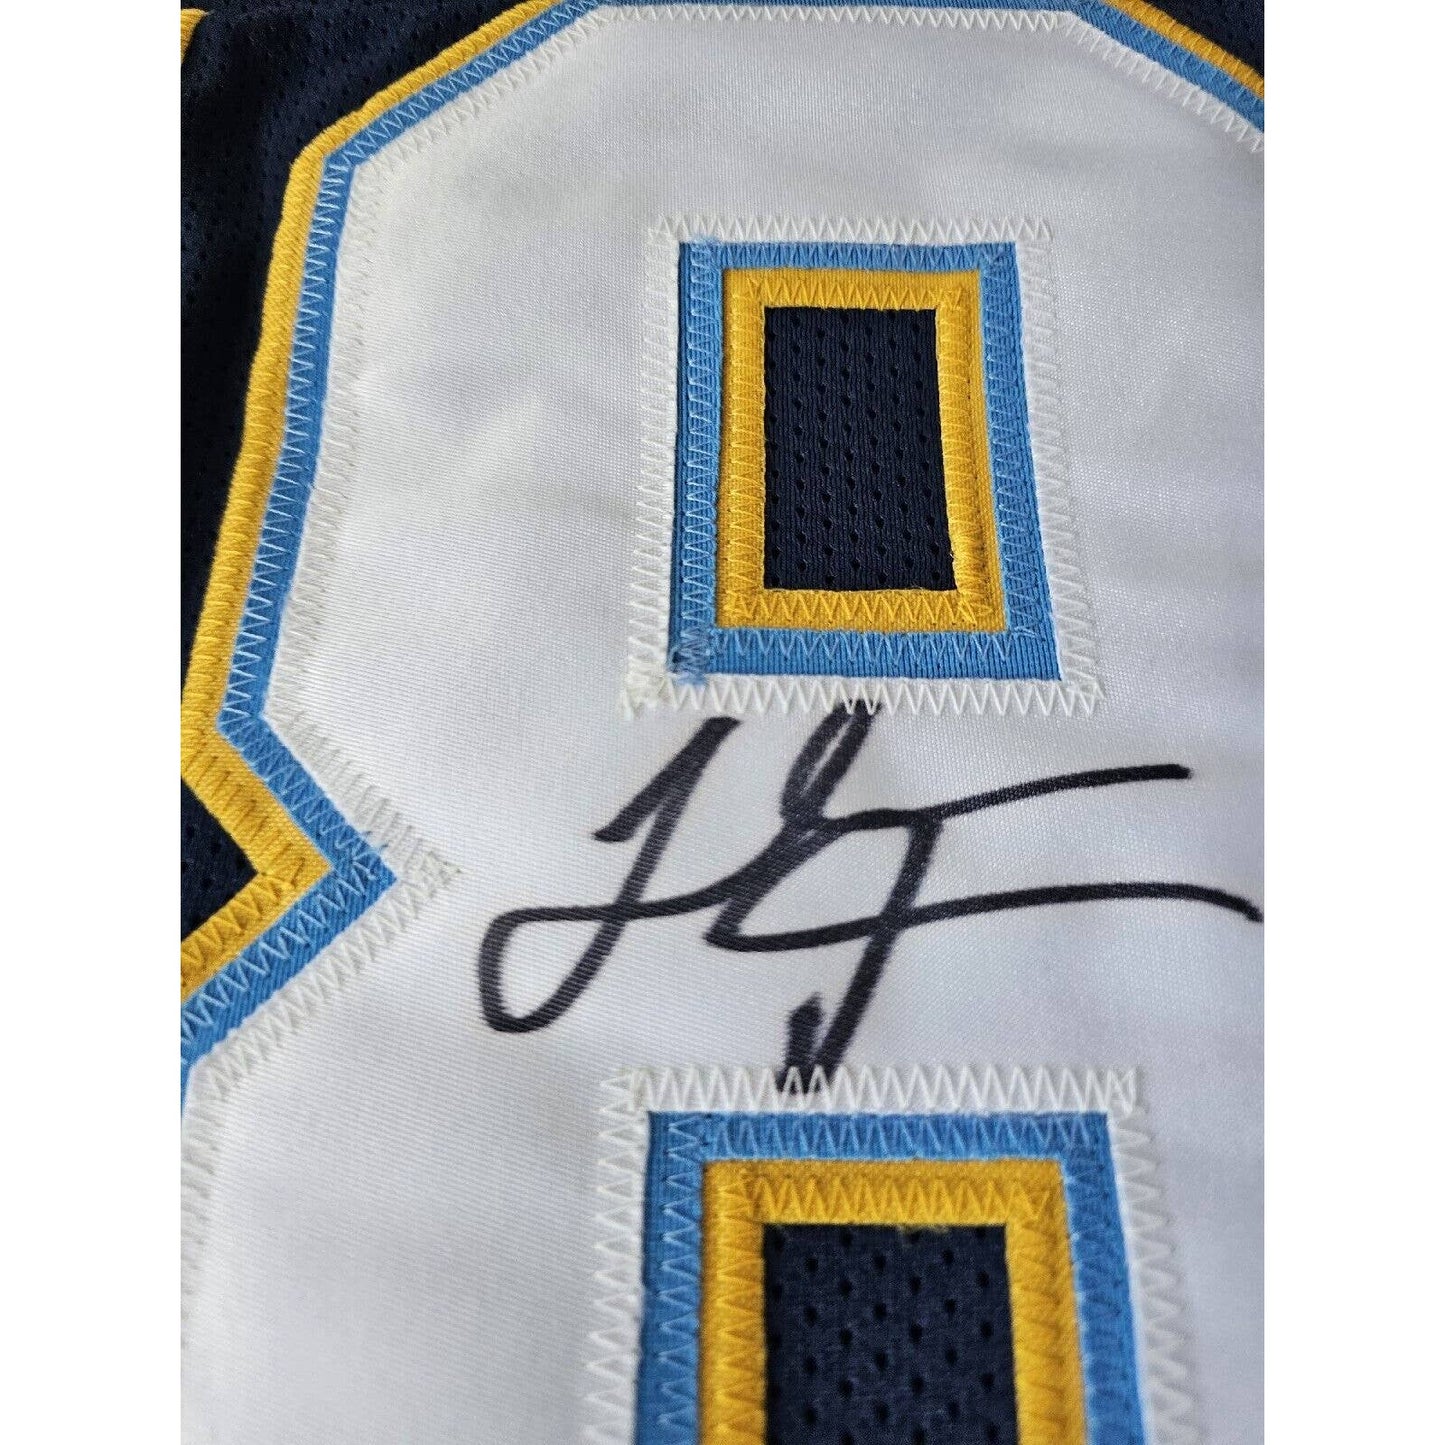 Thomas Davis Sr Autographed/Signed Jersey JSA COA San Diego Chargers Los Angeles